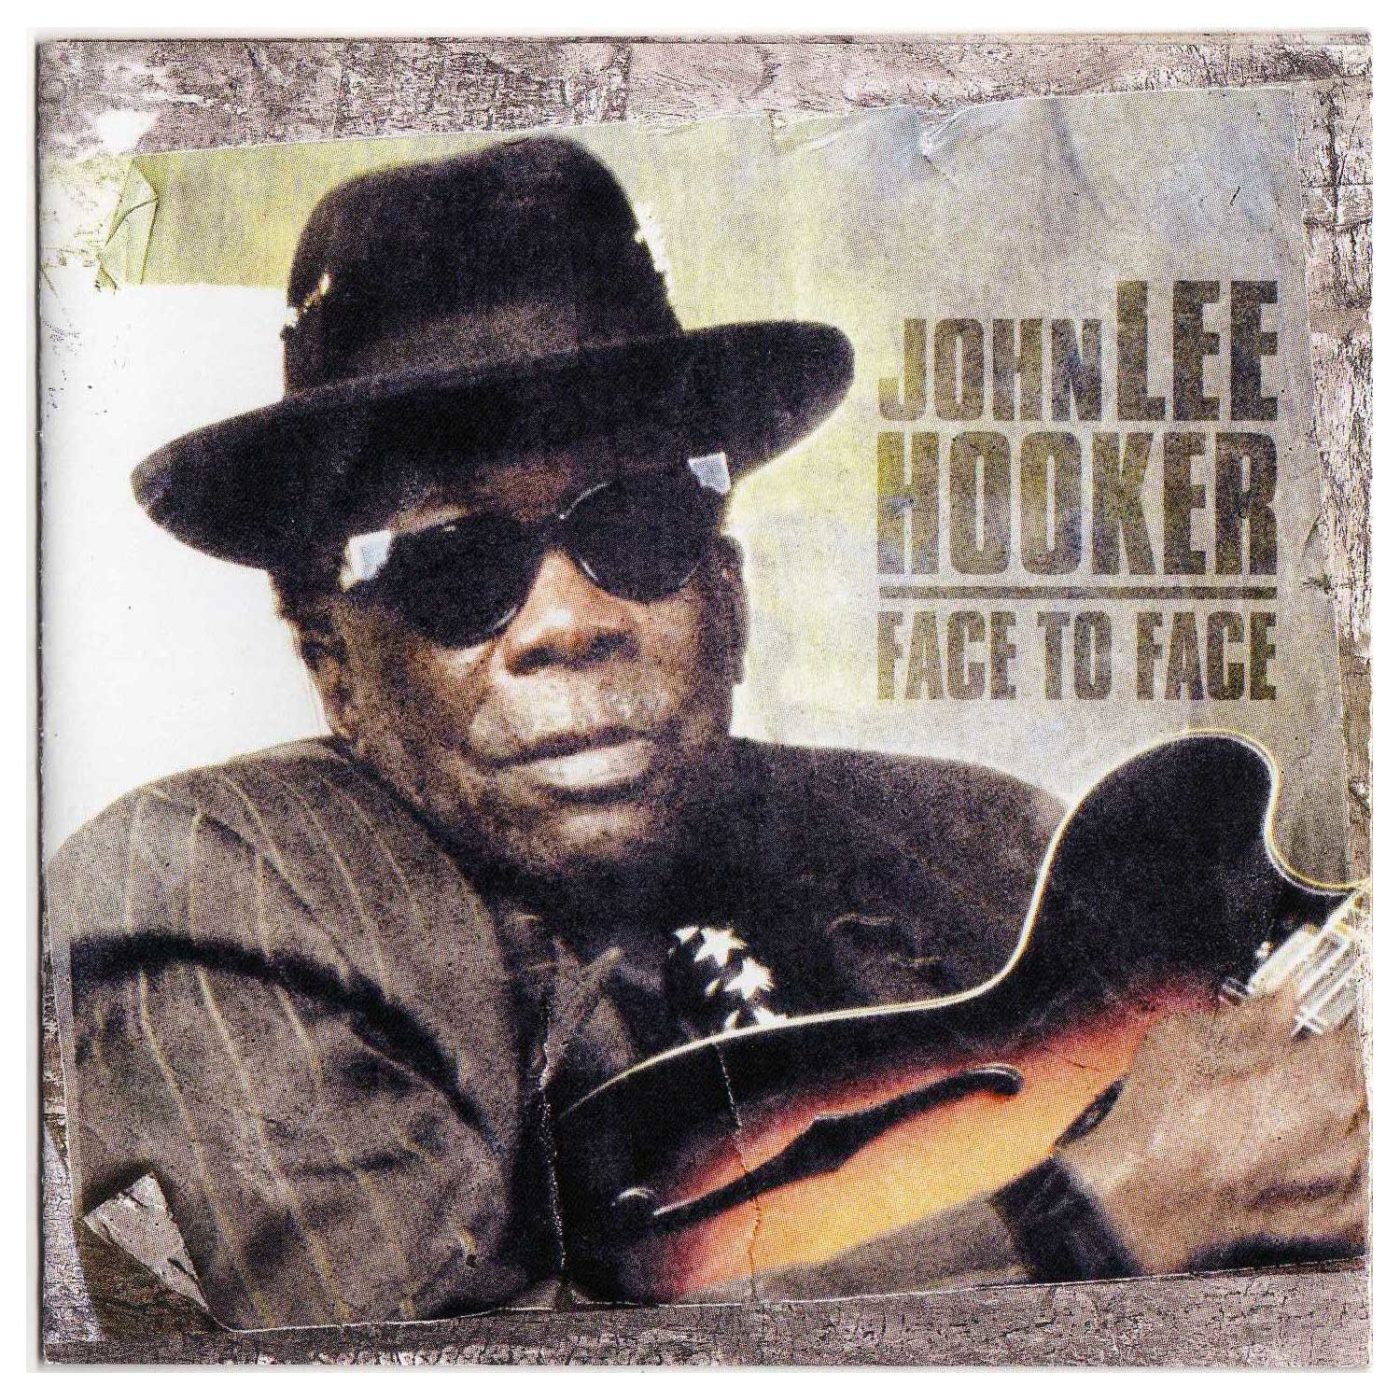 John Lee Hooker Face To Face